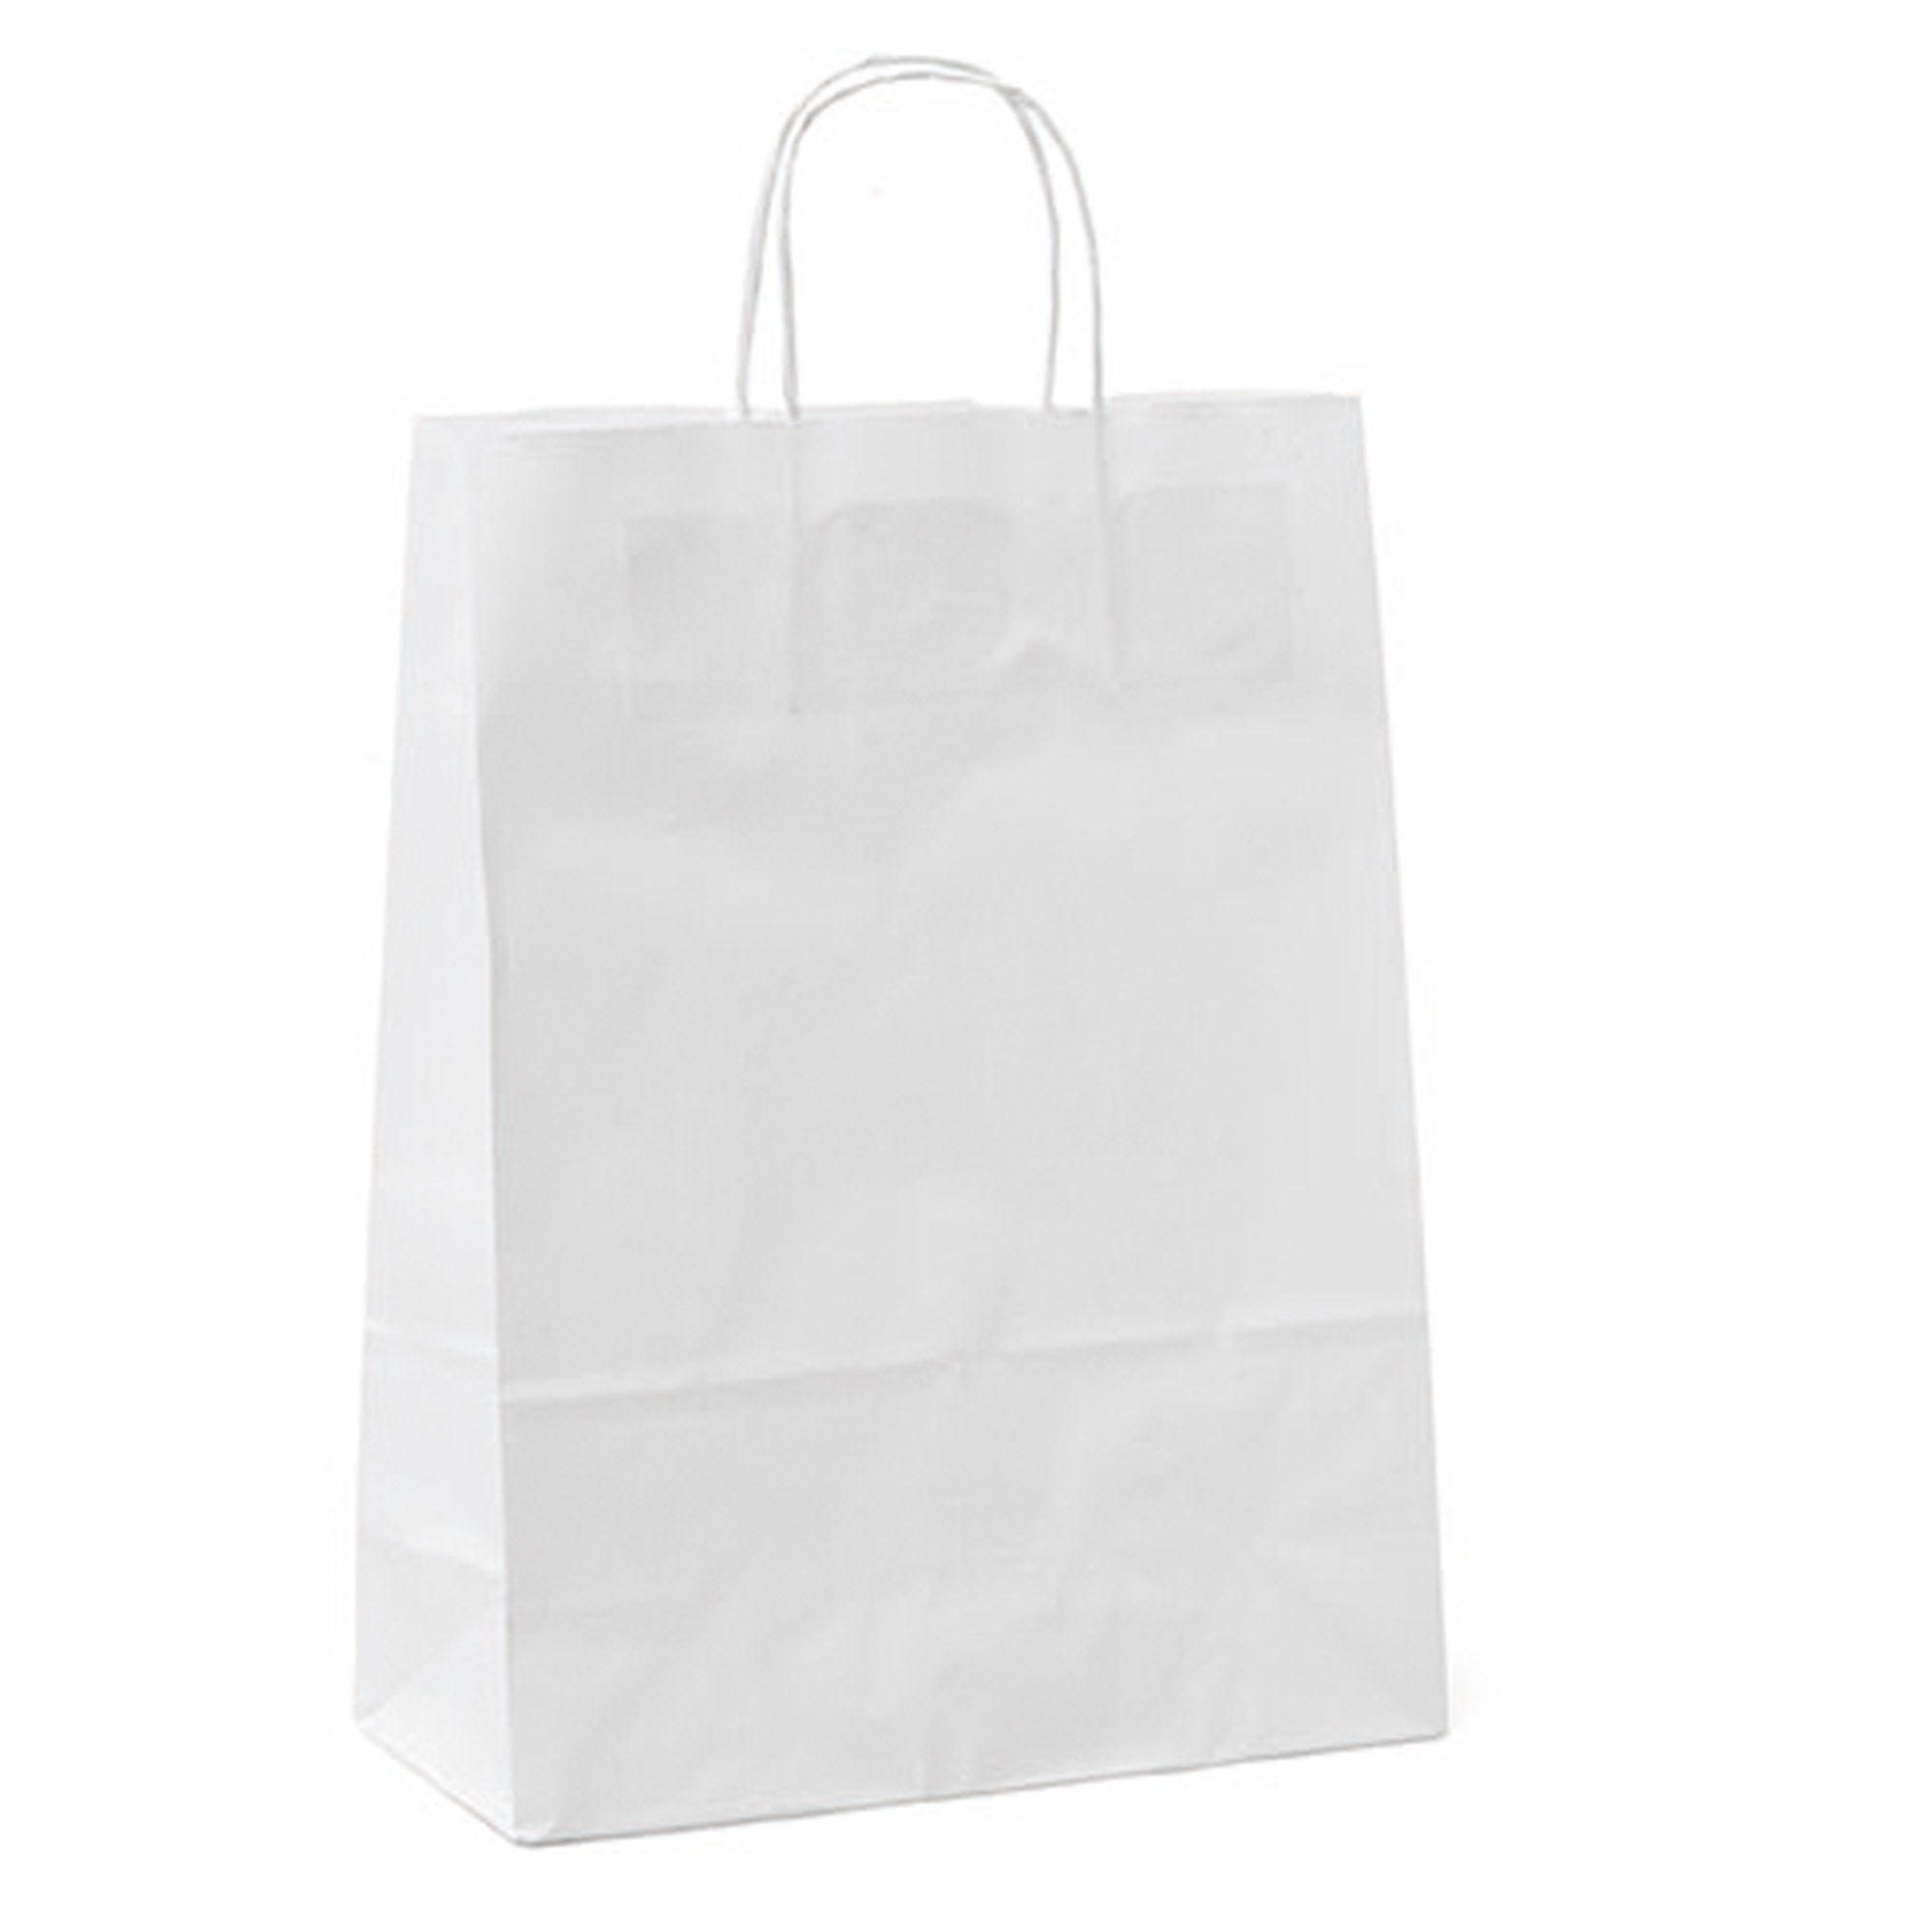 mainetti-bags-25-shoppers-carta-45x15x50cm-bianco-neutro-cordino